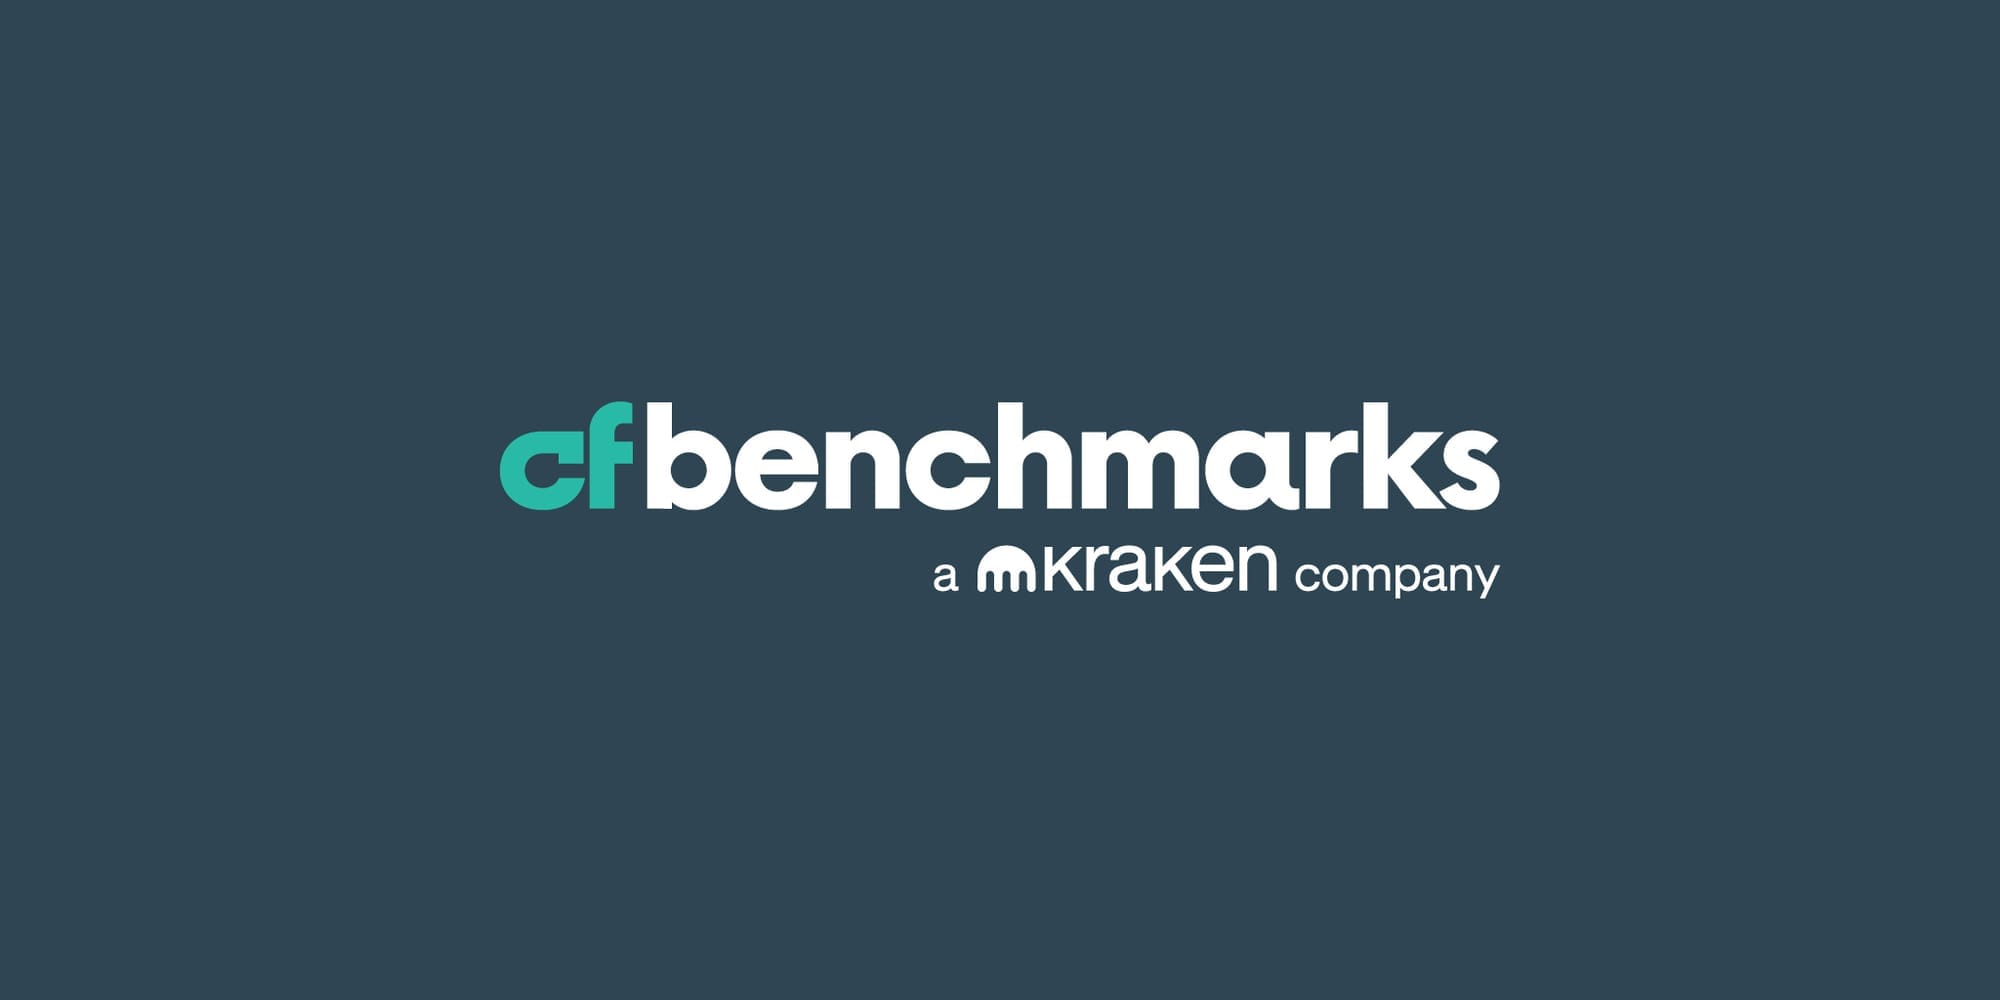 CF Benchmarks Publication Notice